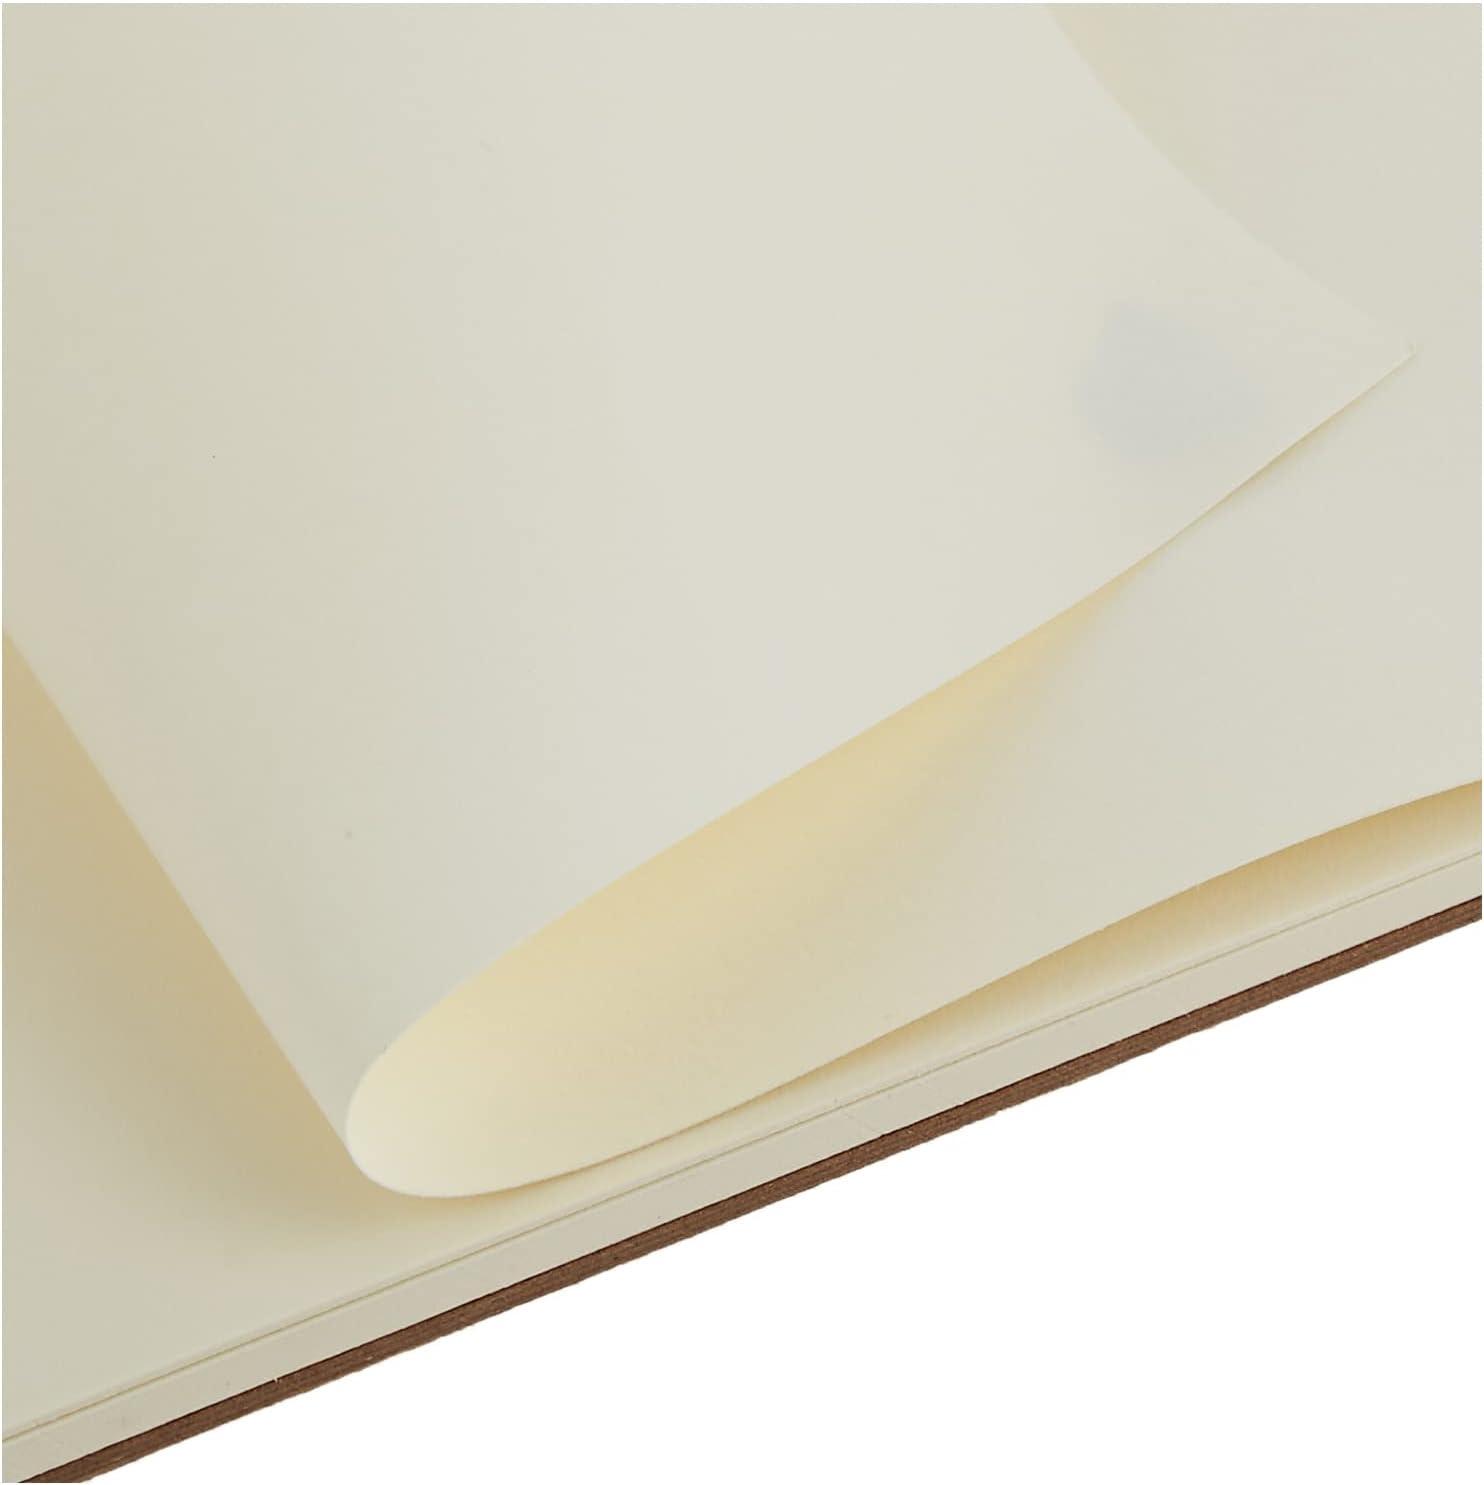 Strathmore Medium Drawing Spiral Paper Pad 12X18- 24 Sheets